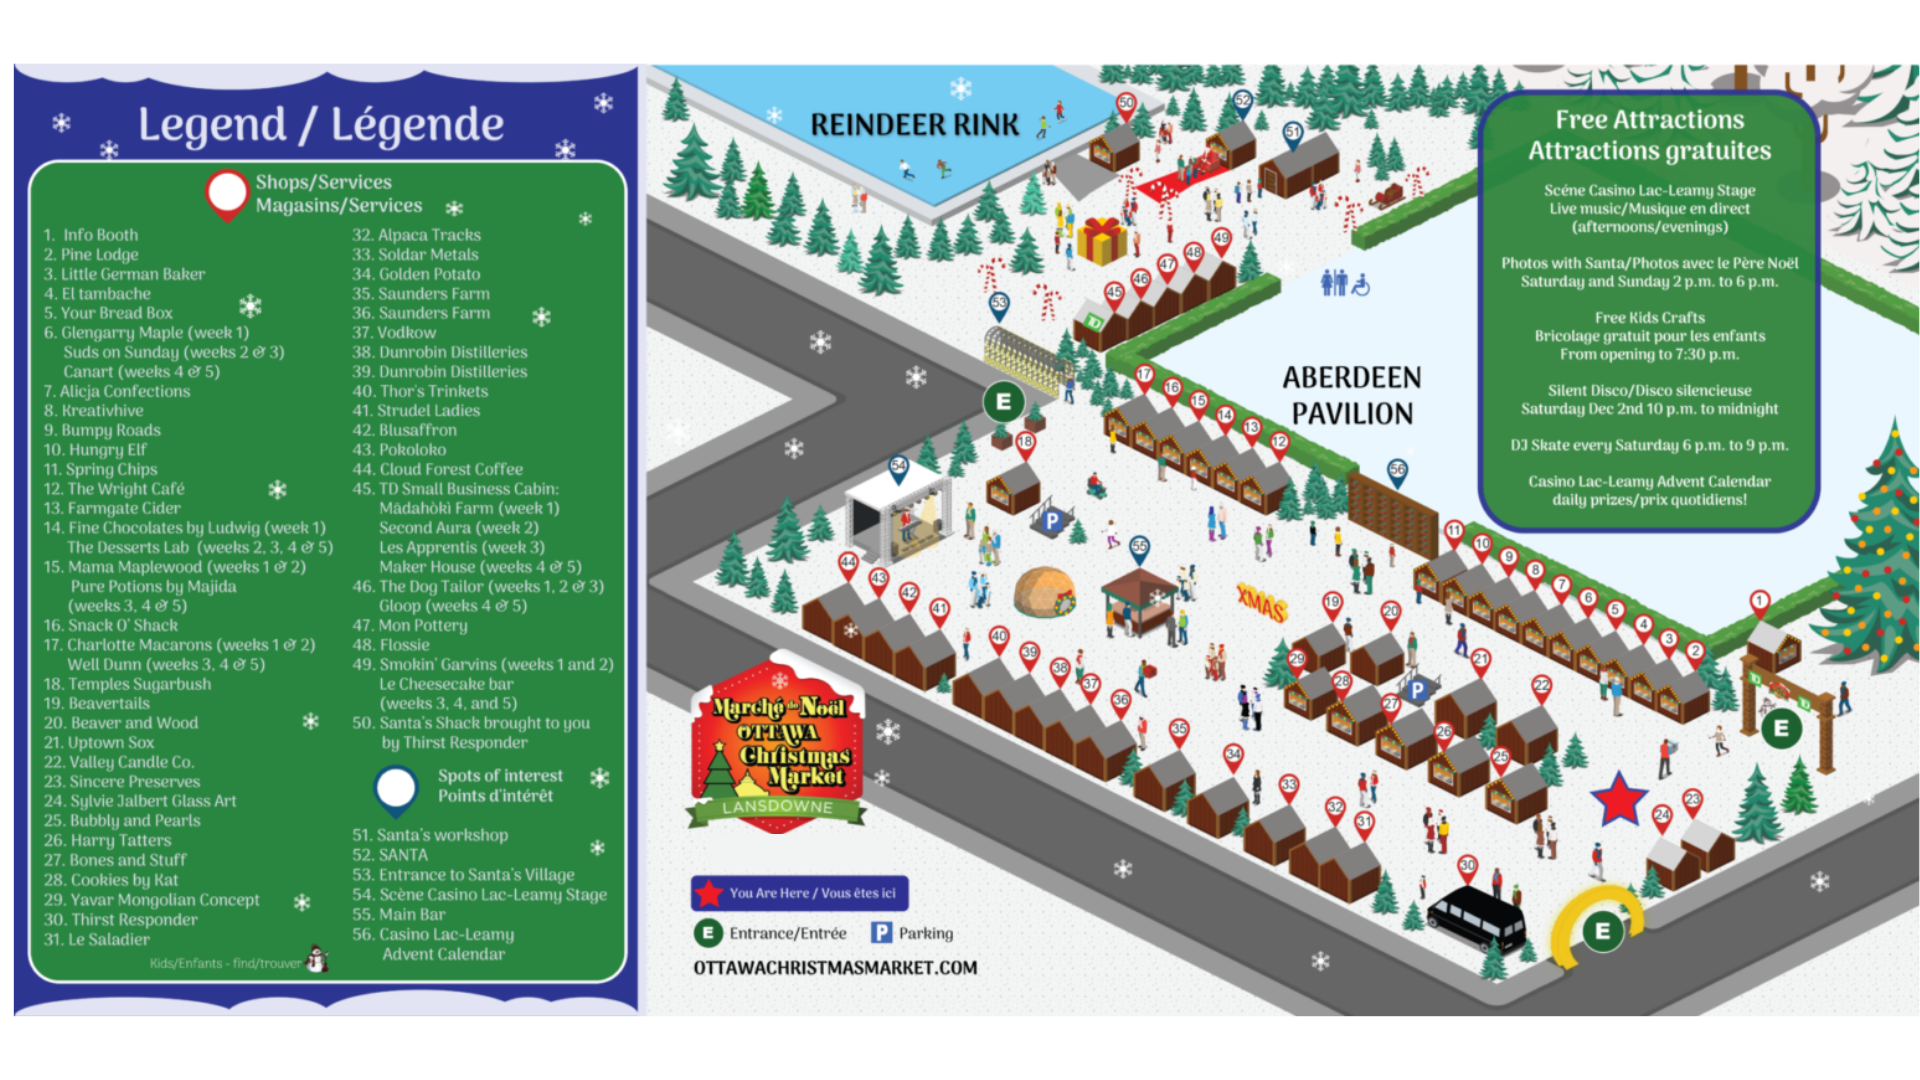 Ottawa Christmas Market Venue 2023 edition at Lansdowne